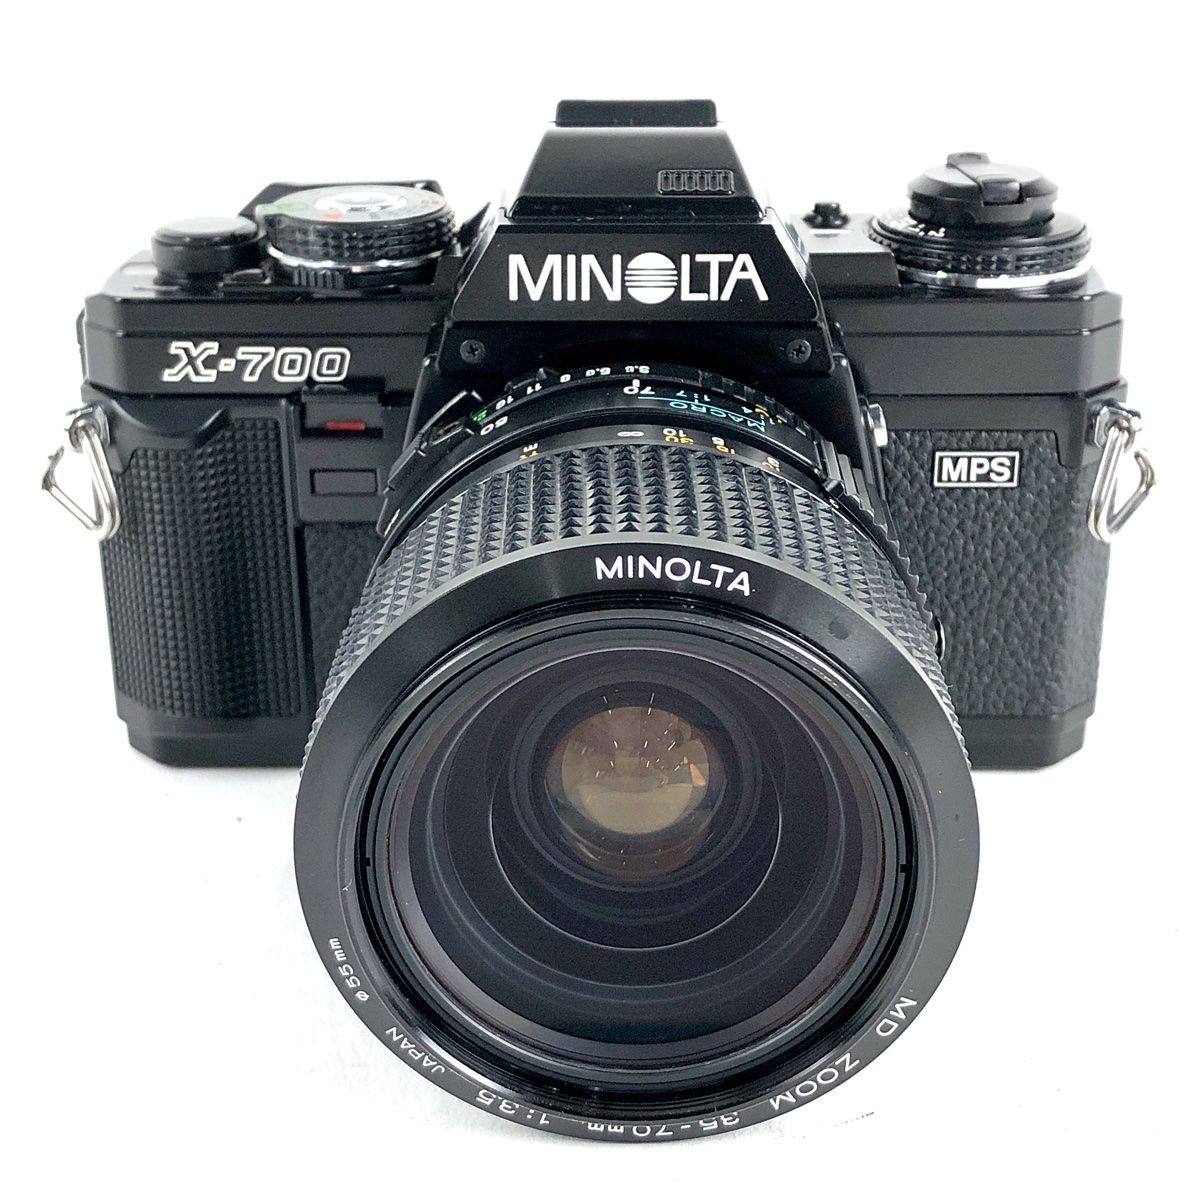 MINOLTA X-700 MD ZOOM 35-70mm f3.5 MACRO - フィルムカメラ